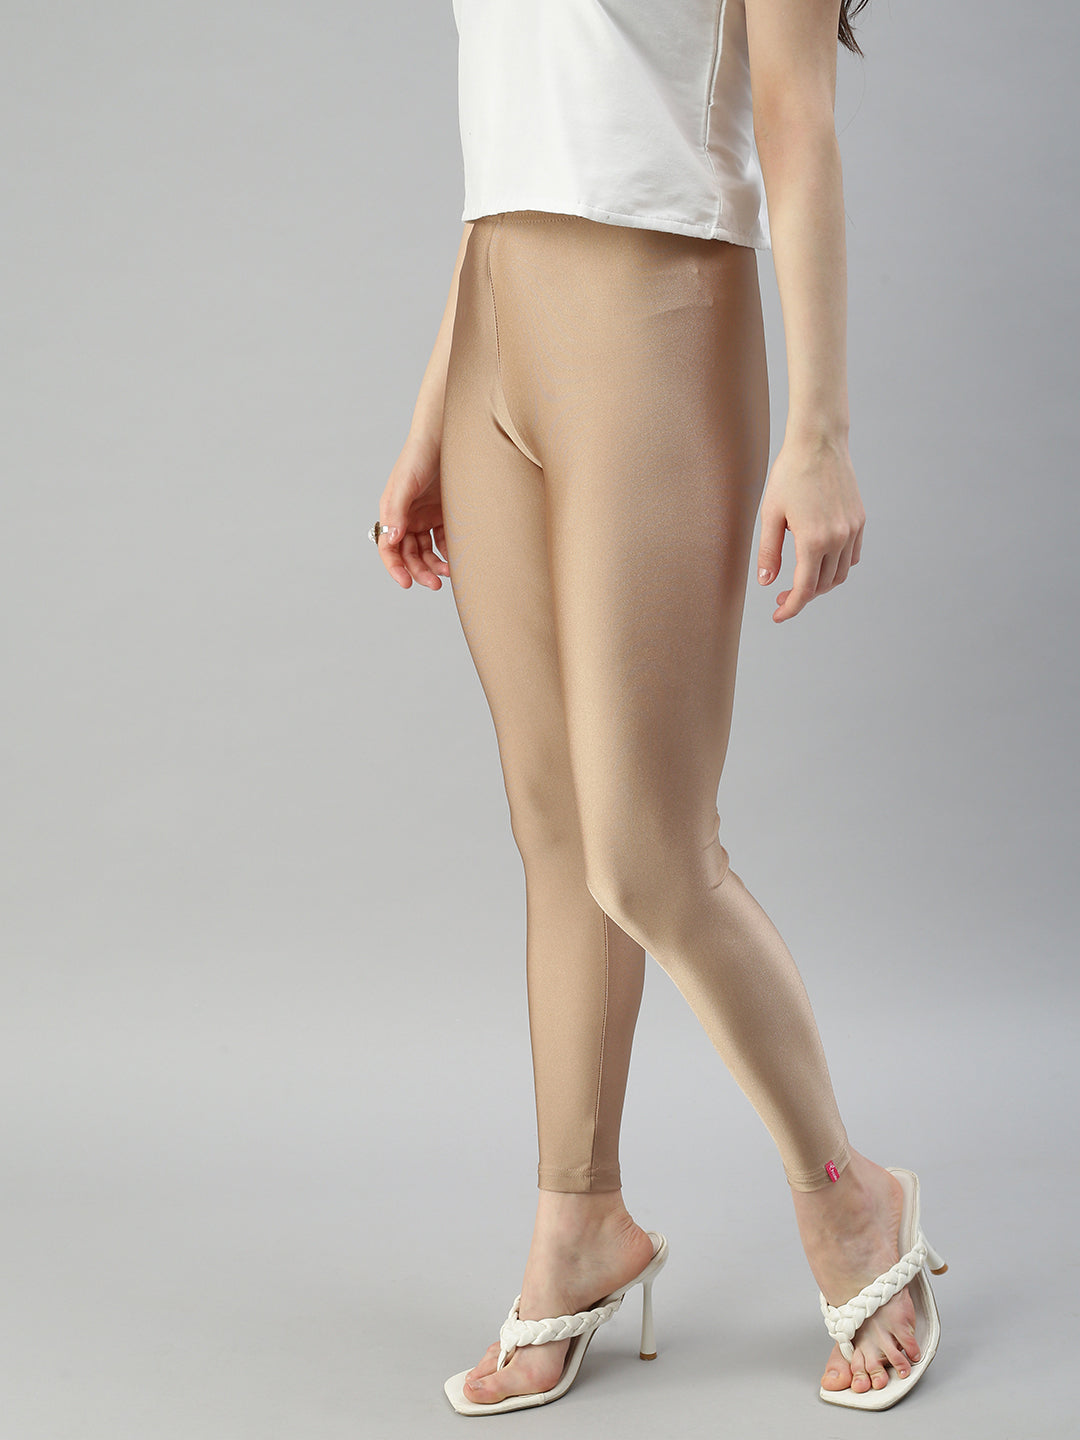 Get Glowing in Prisma's Nude Shimmer Leggings